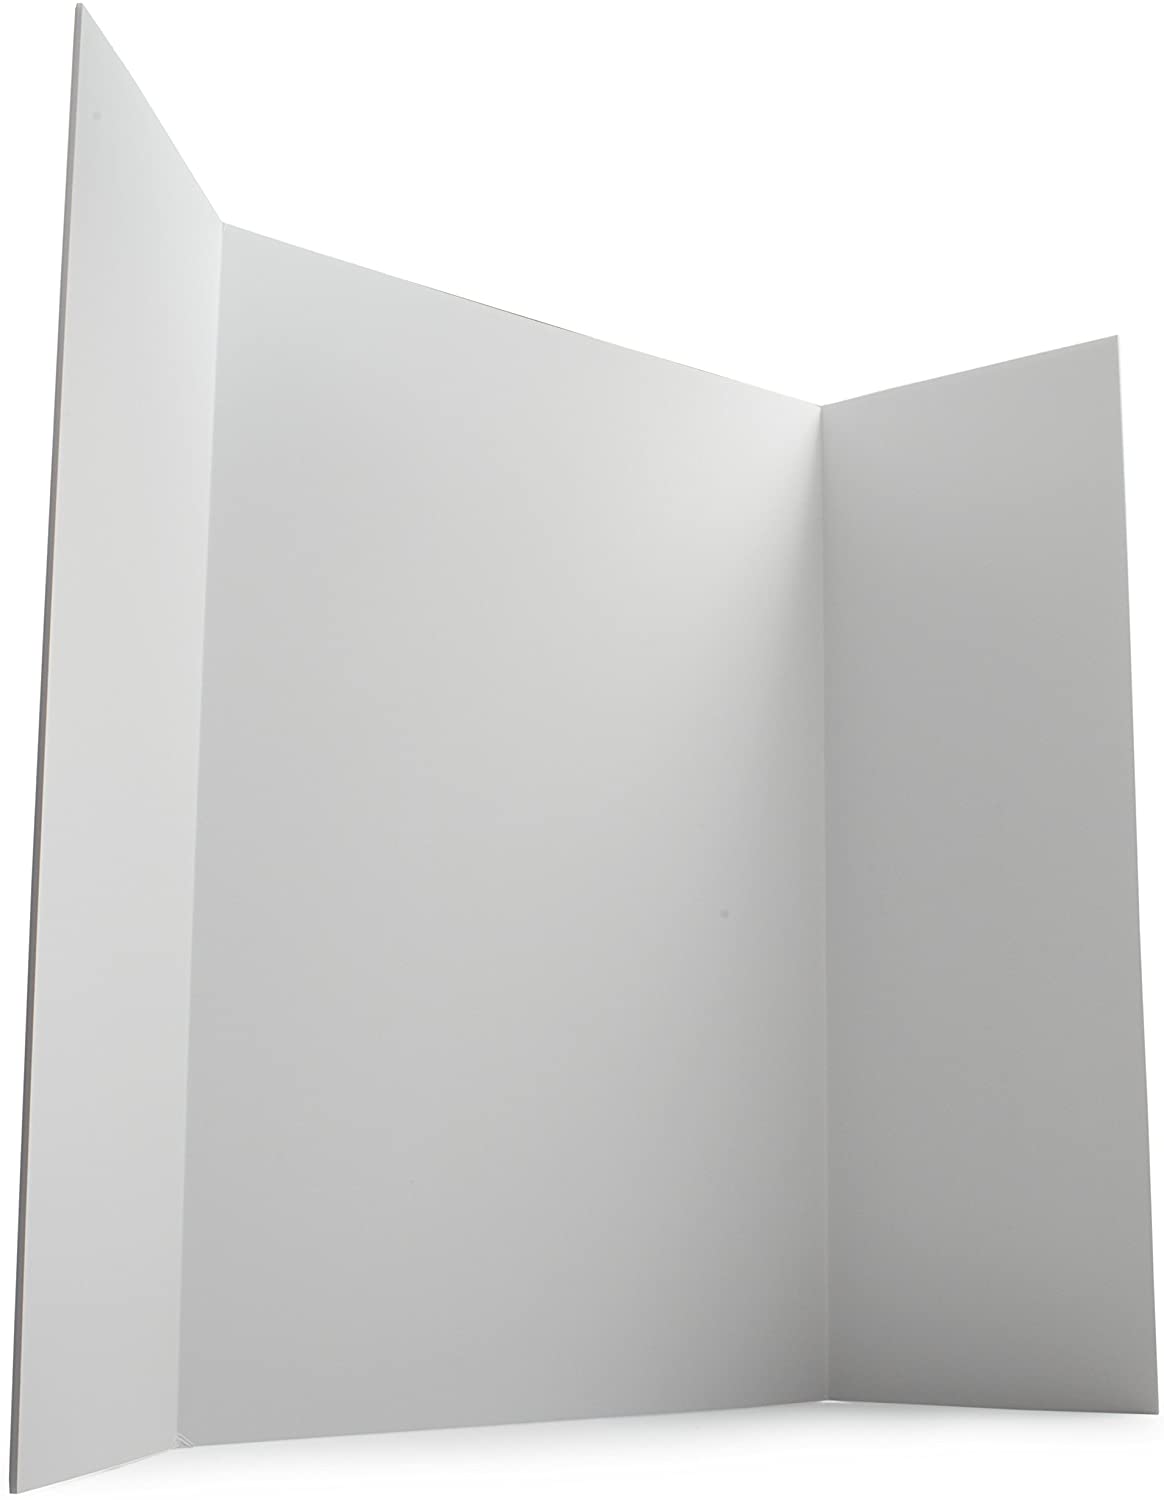 Elmer's Tri-Fold Premium Foam Display Board, 36x48 Inch – Middlesex School  Bookstore